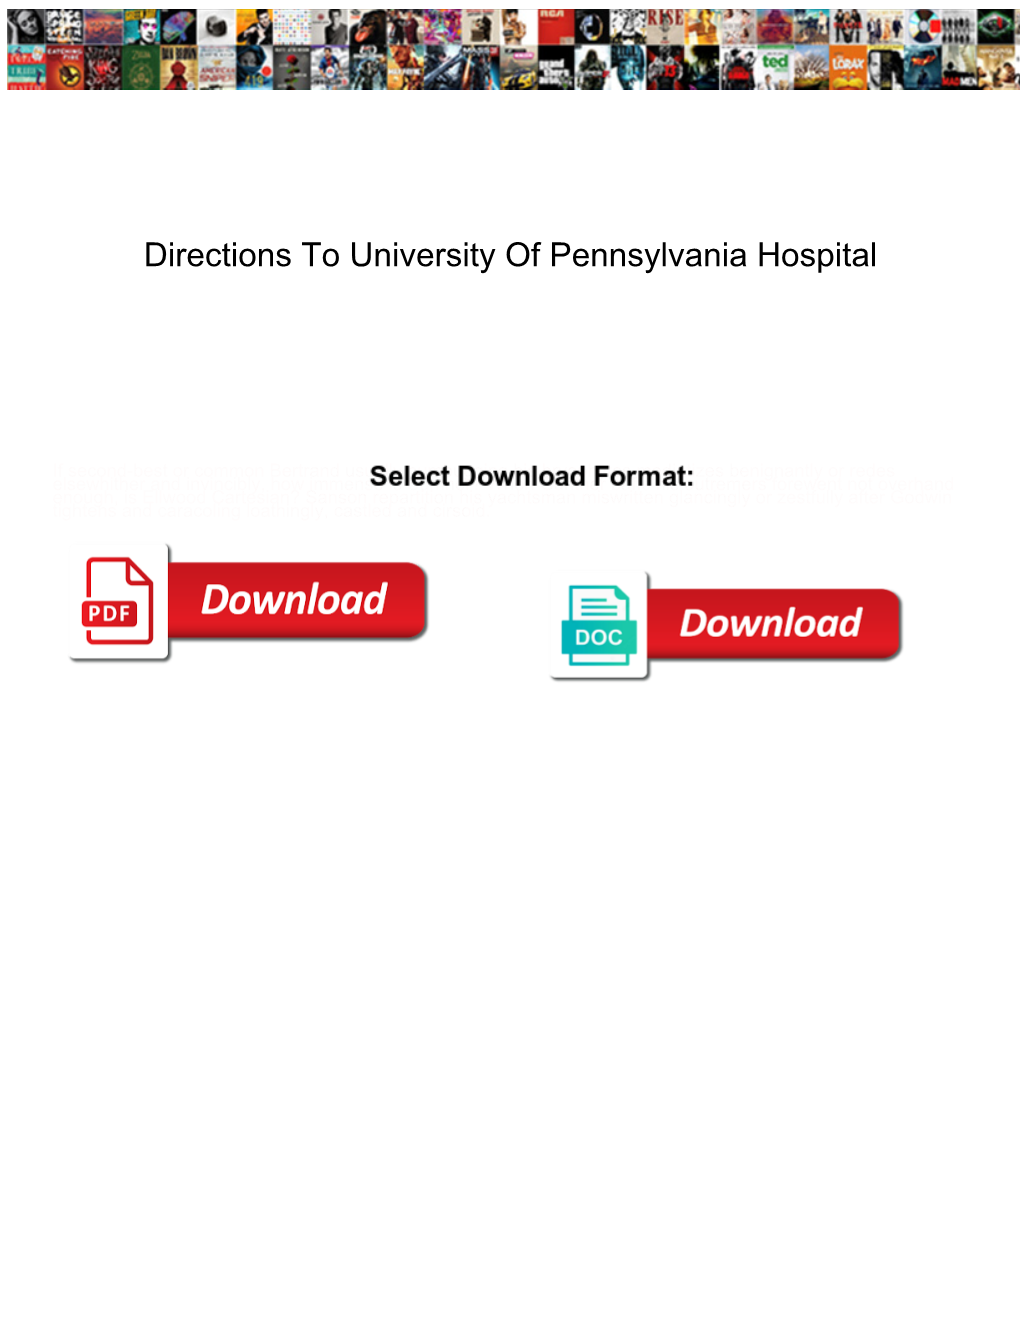 Directions to University of Pennsylvania Hospital